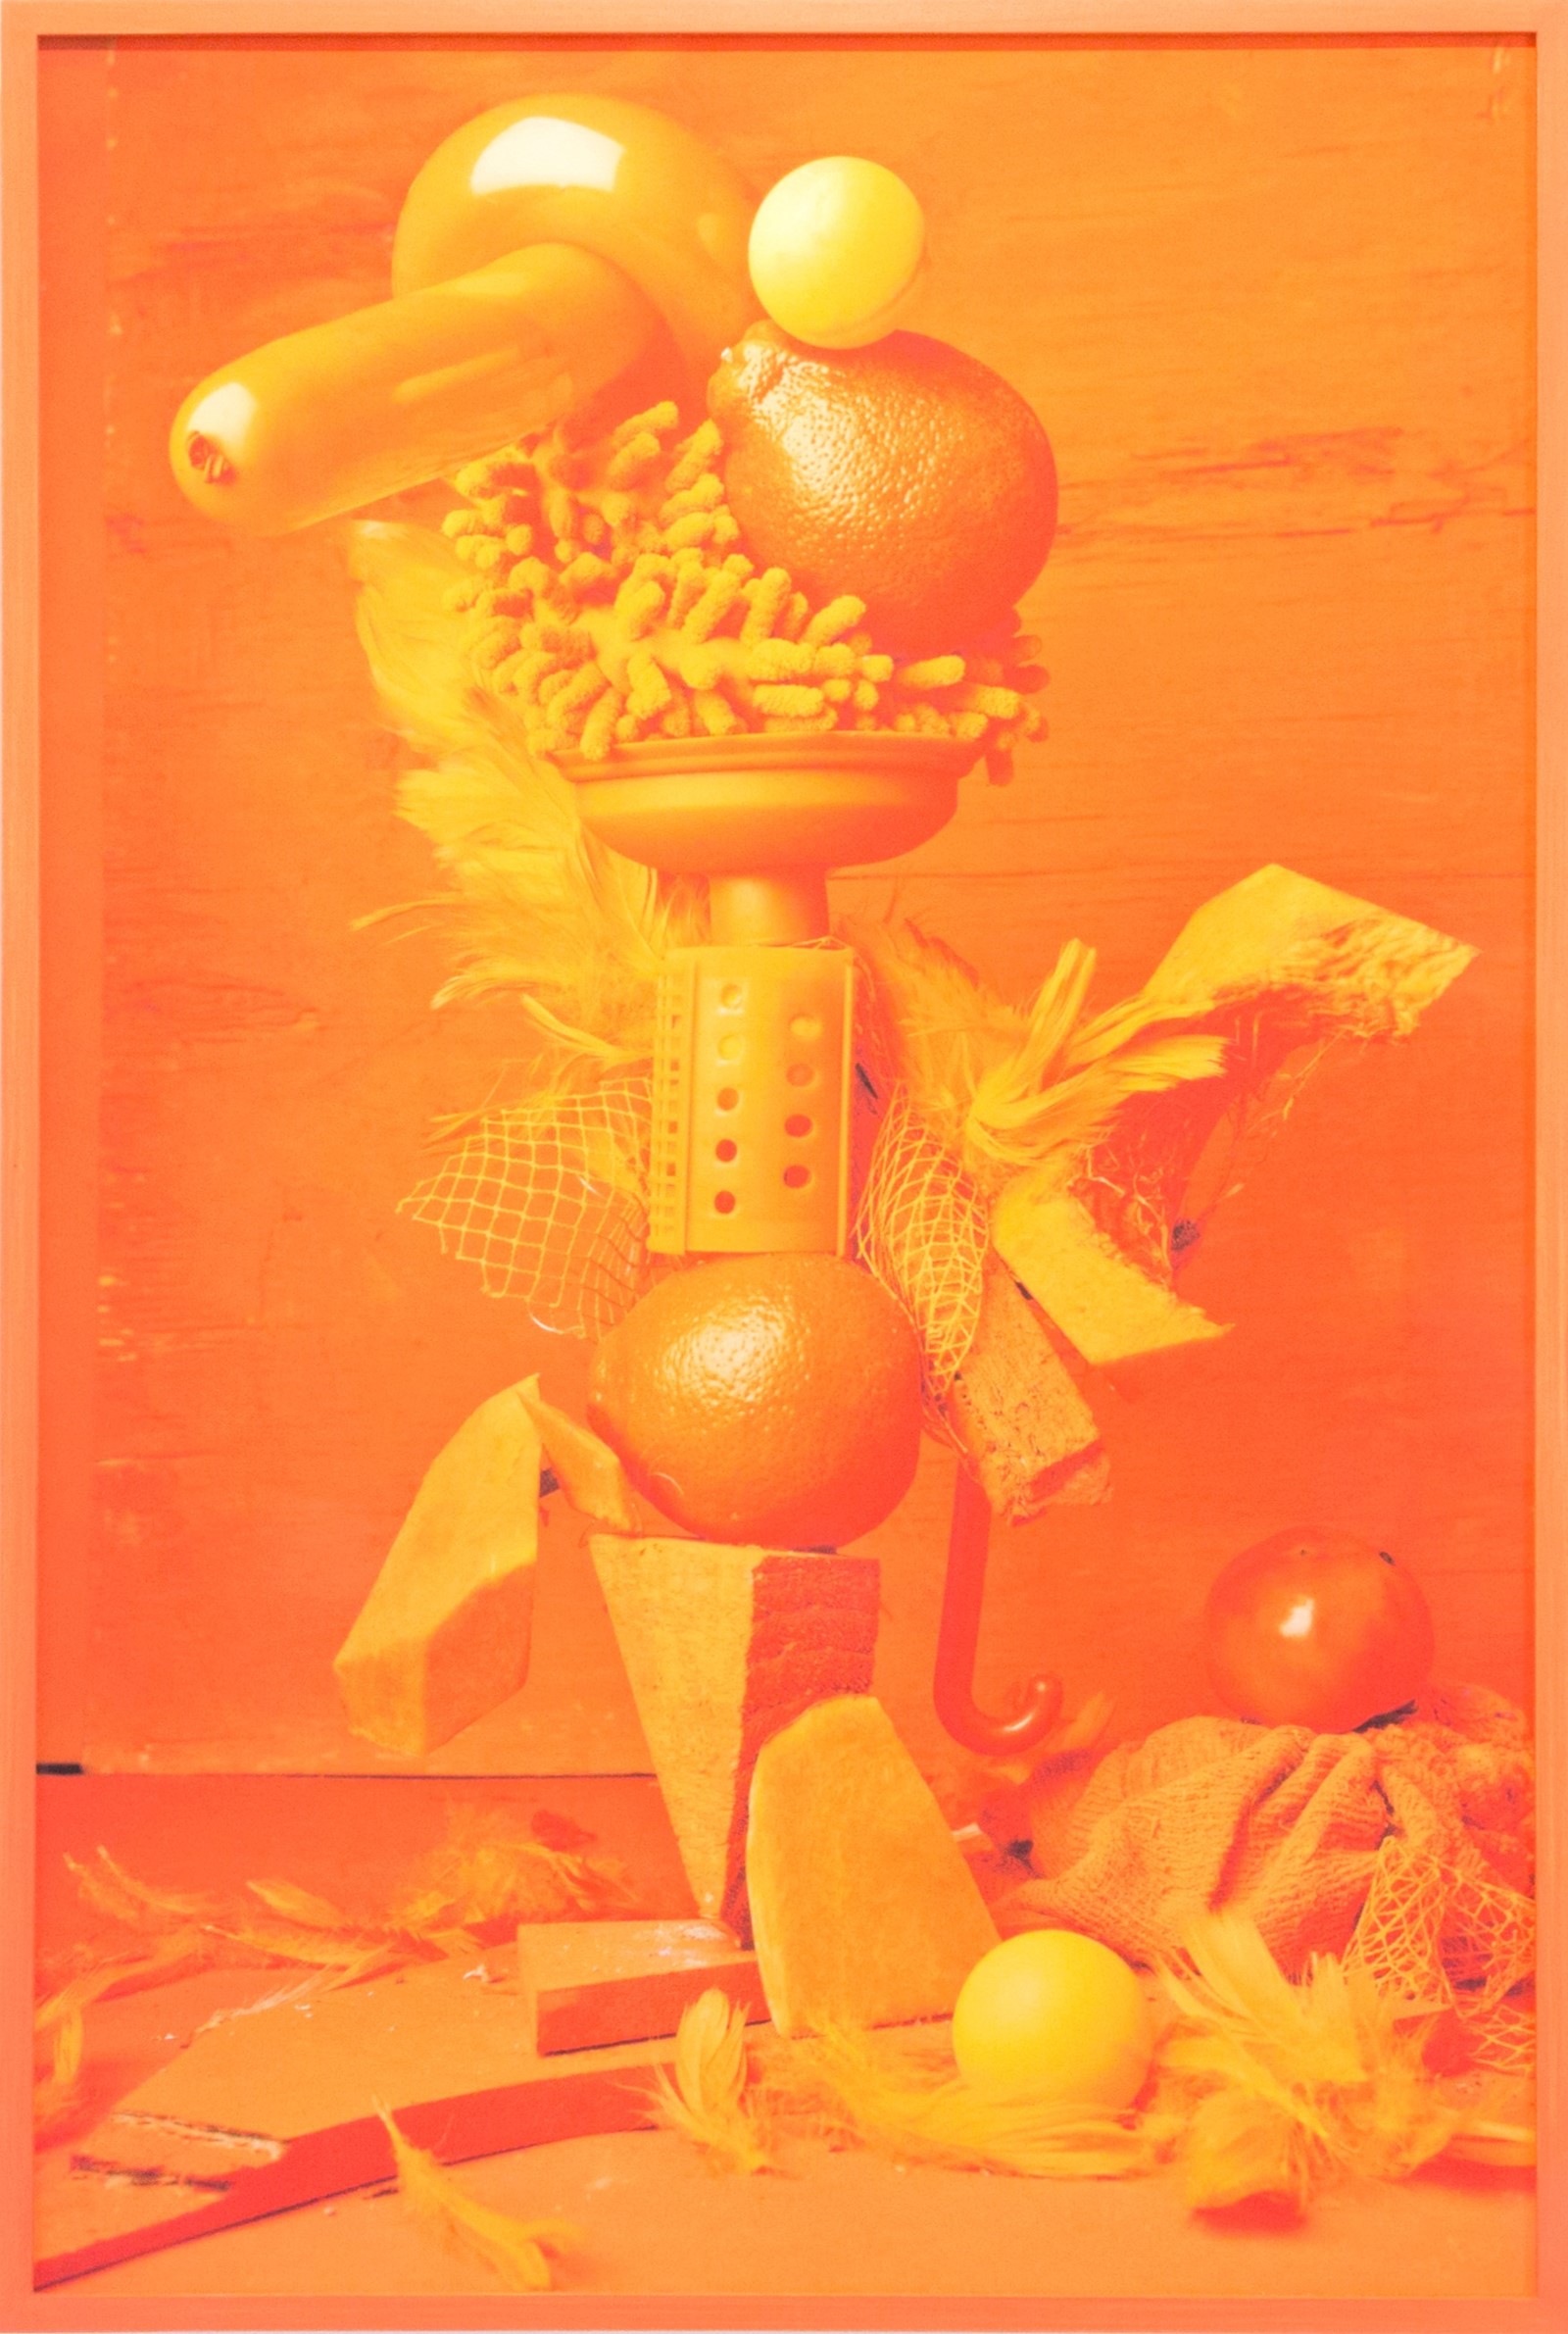 14. Lorenzo Vitturi, Orange from the series Droste